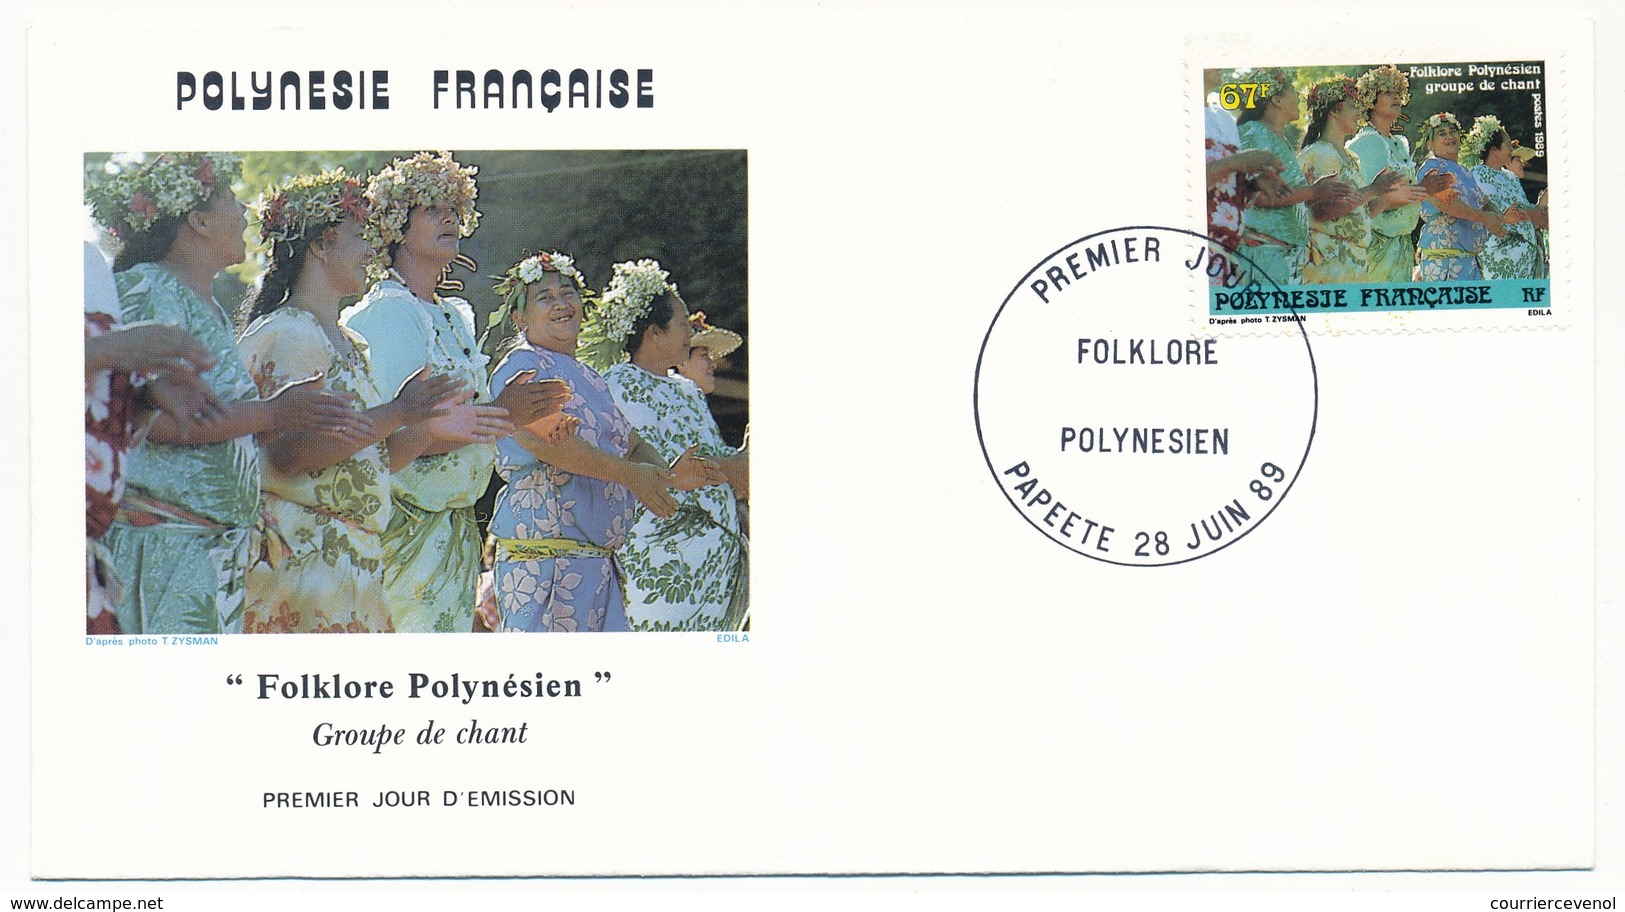 POLYNESIE FRANCAISE - 3 FDC - Folklore Polynésien - 28 Juin 1989 - Papeete - FDC